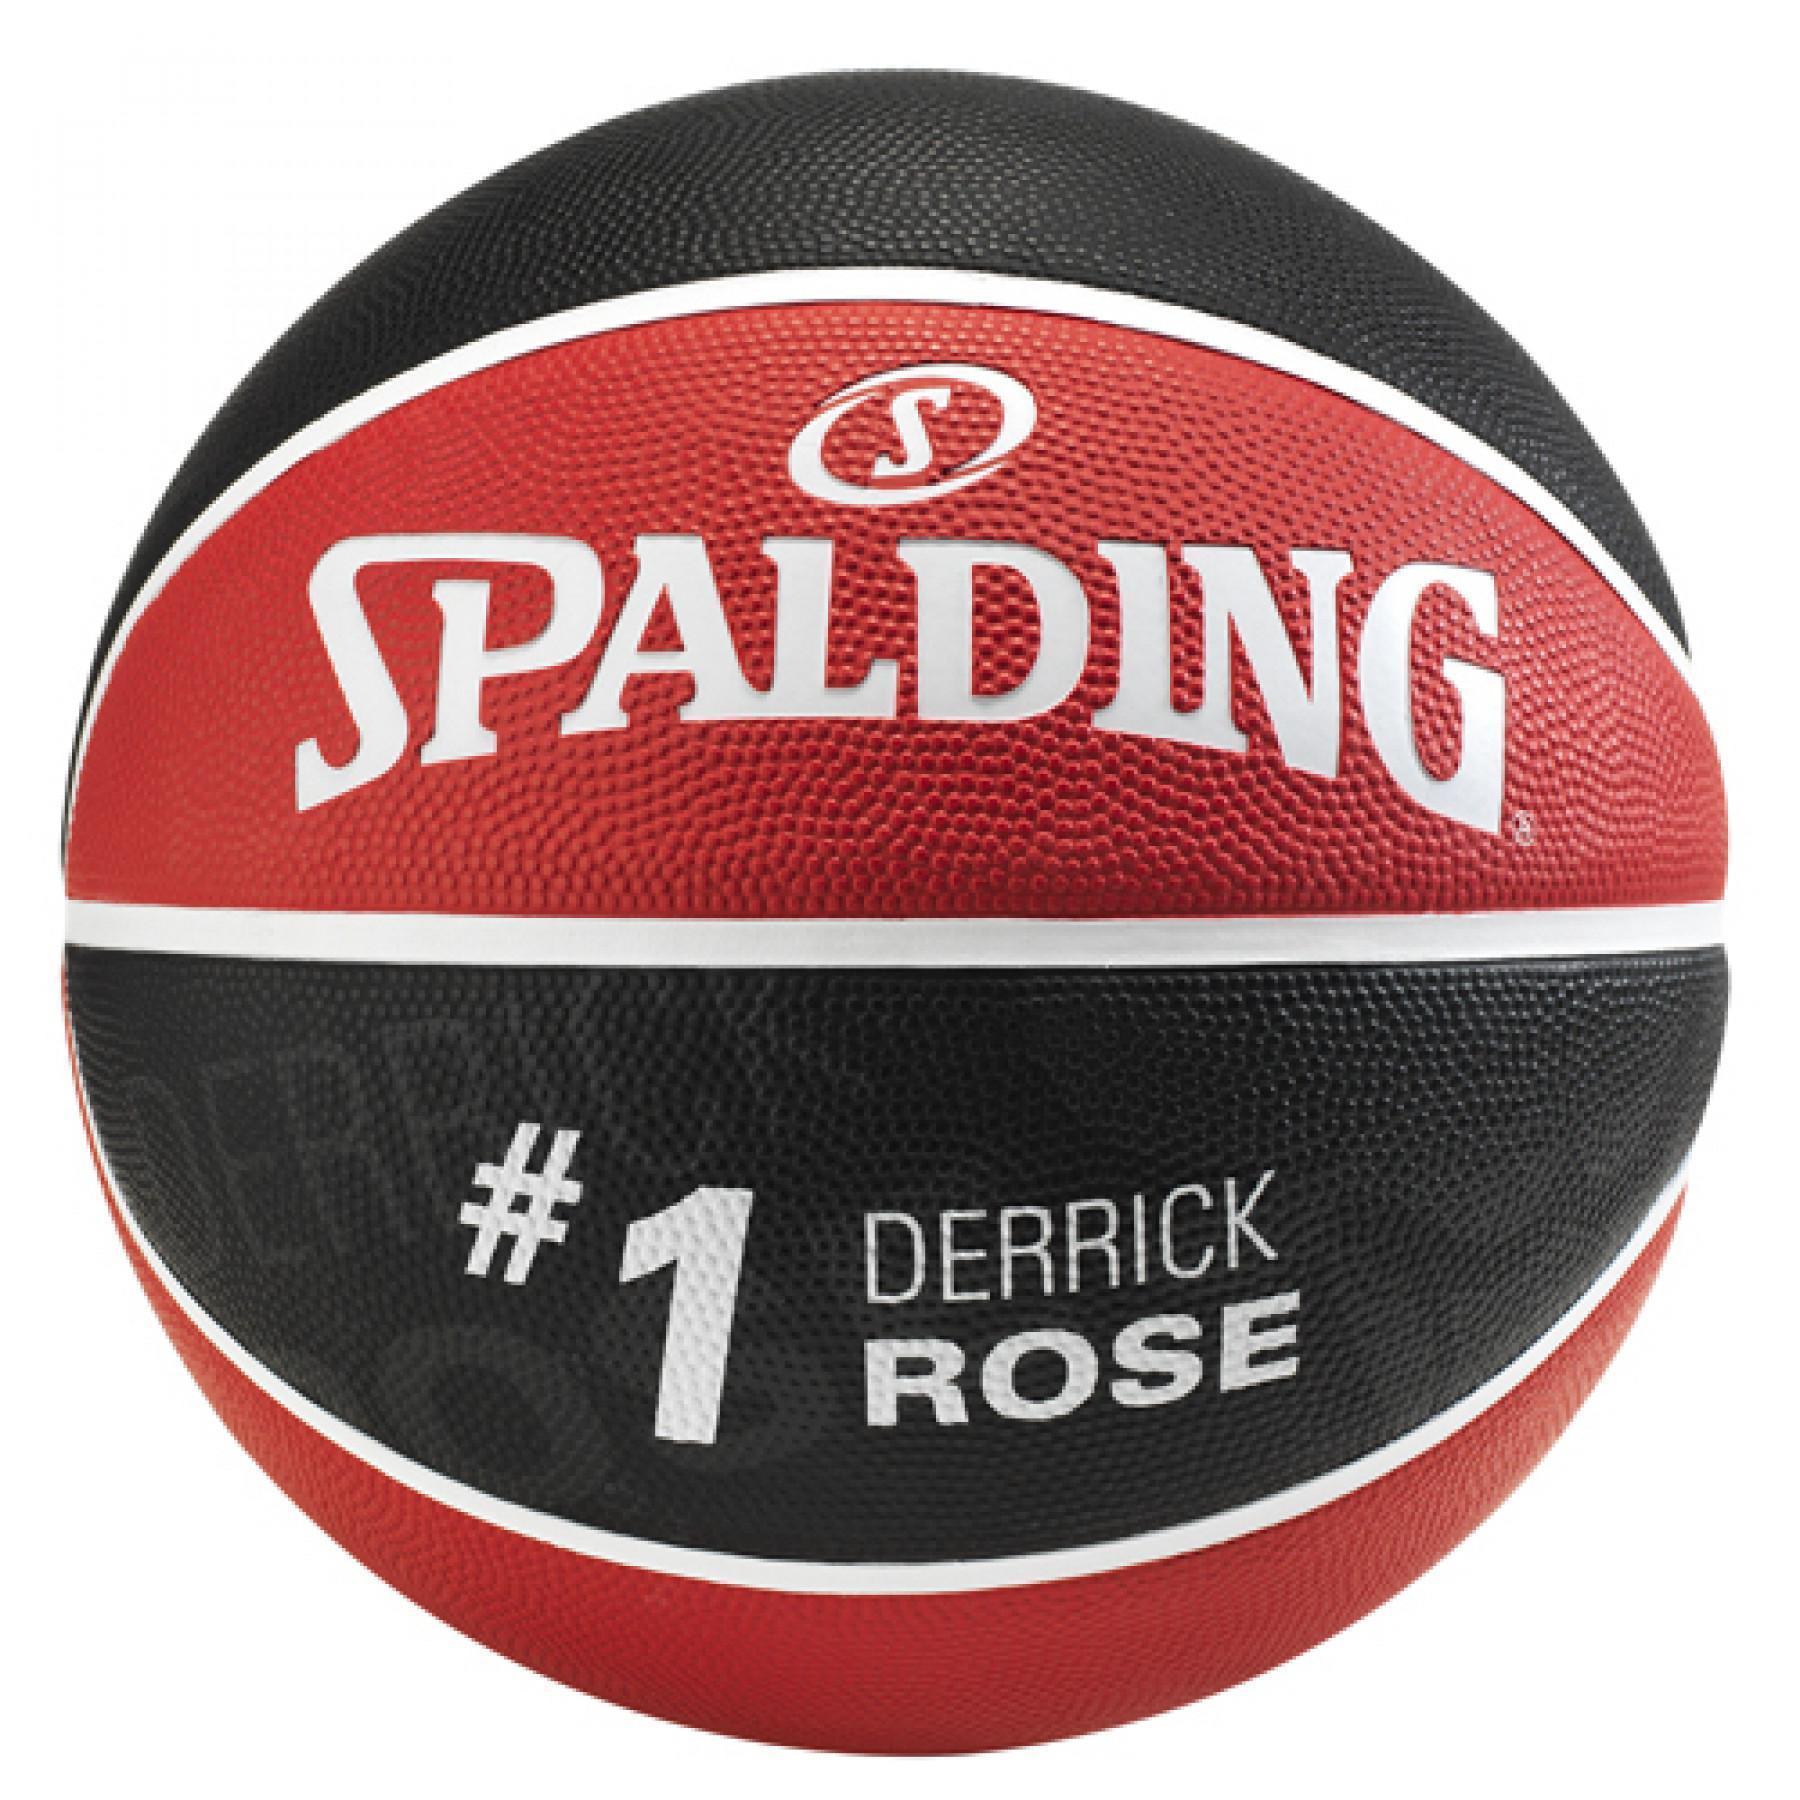 Balon Spalding Player Derrick Rose